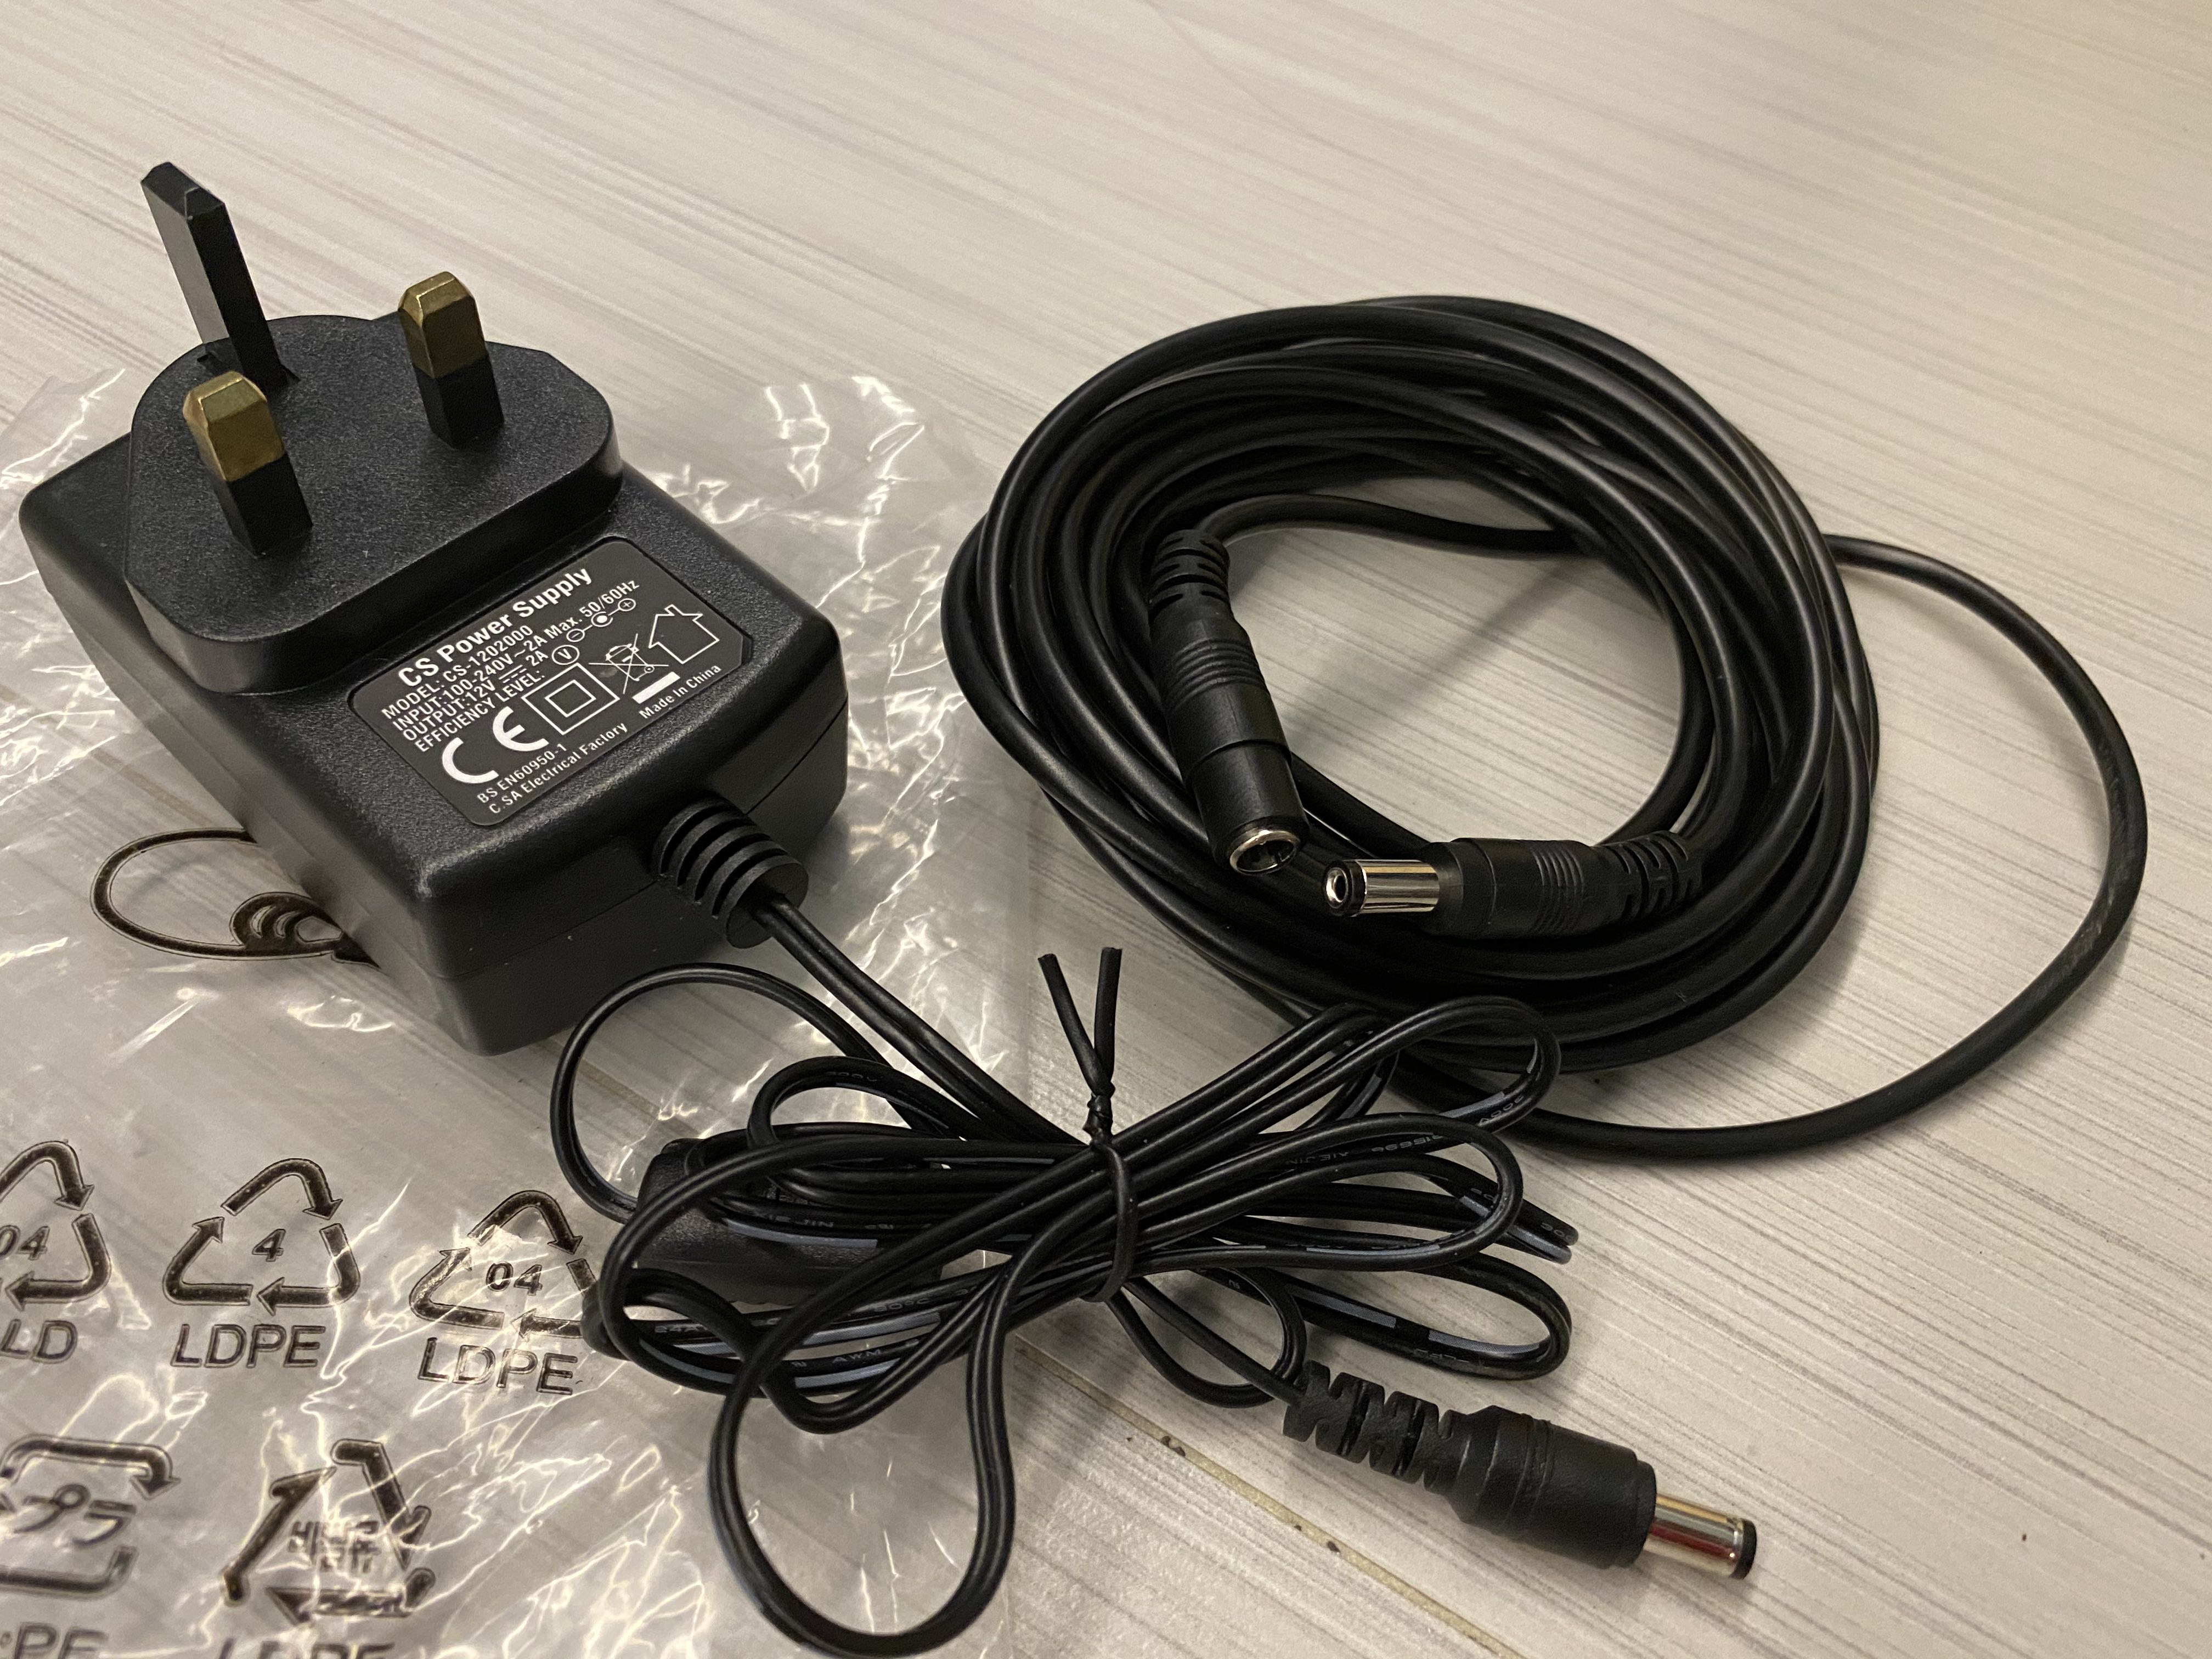 [UL Certified] Security-01 AC 100-240V to DC 12V 2A Power Supply Adapter,  Plug 5.5mm x 2.1mm for CCTV Camera DVR NVR Led Light Strip UL Listed FCC